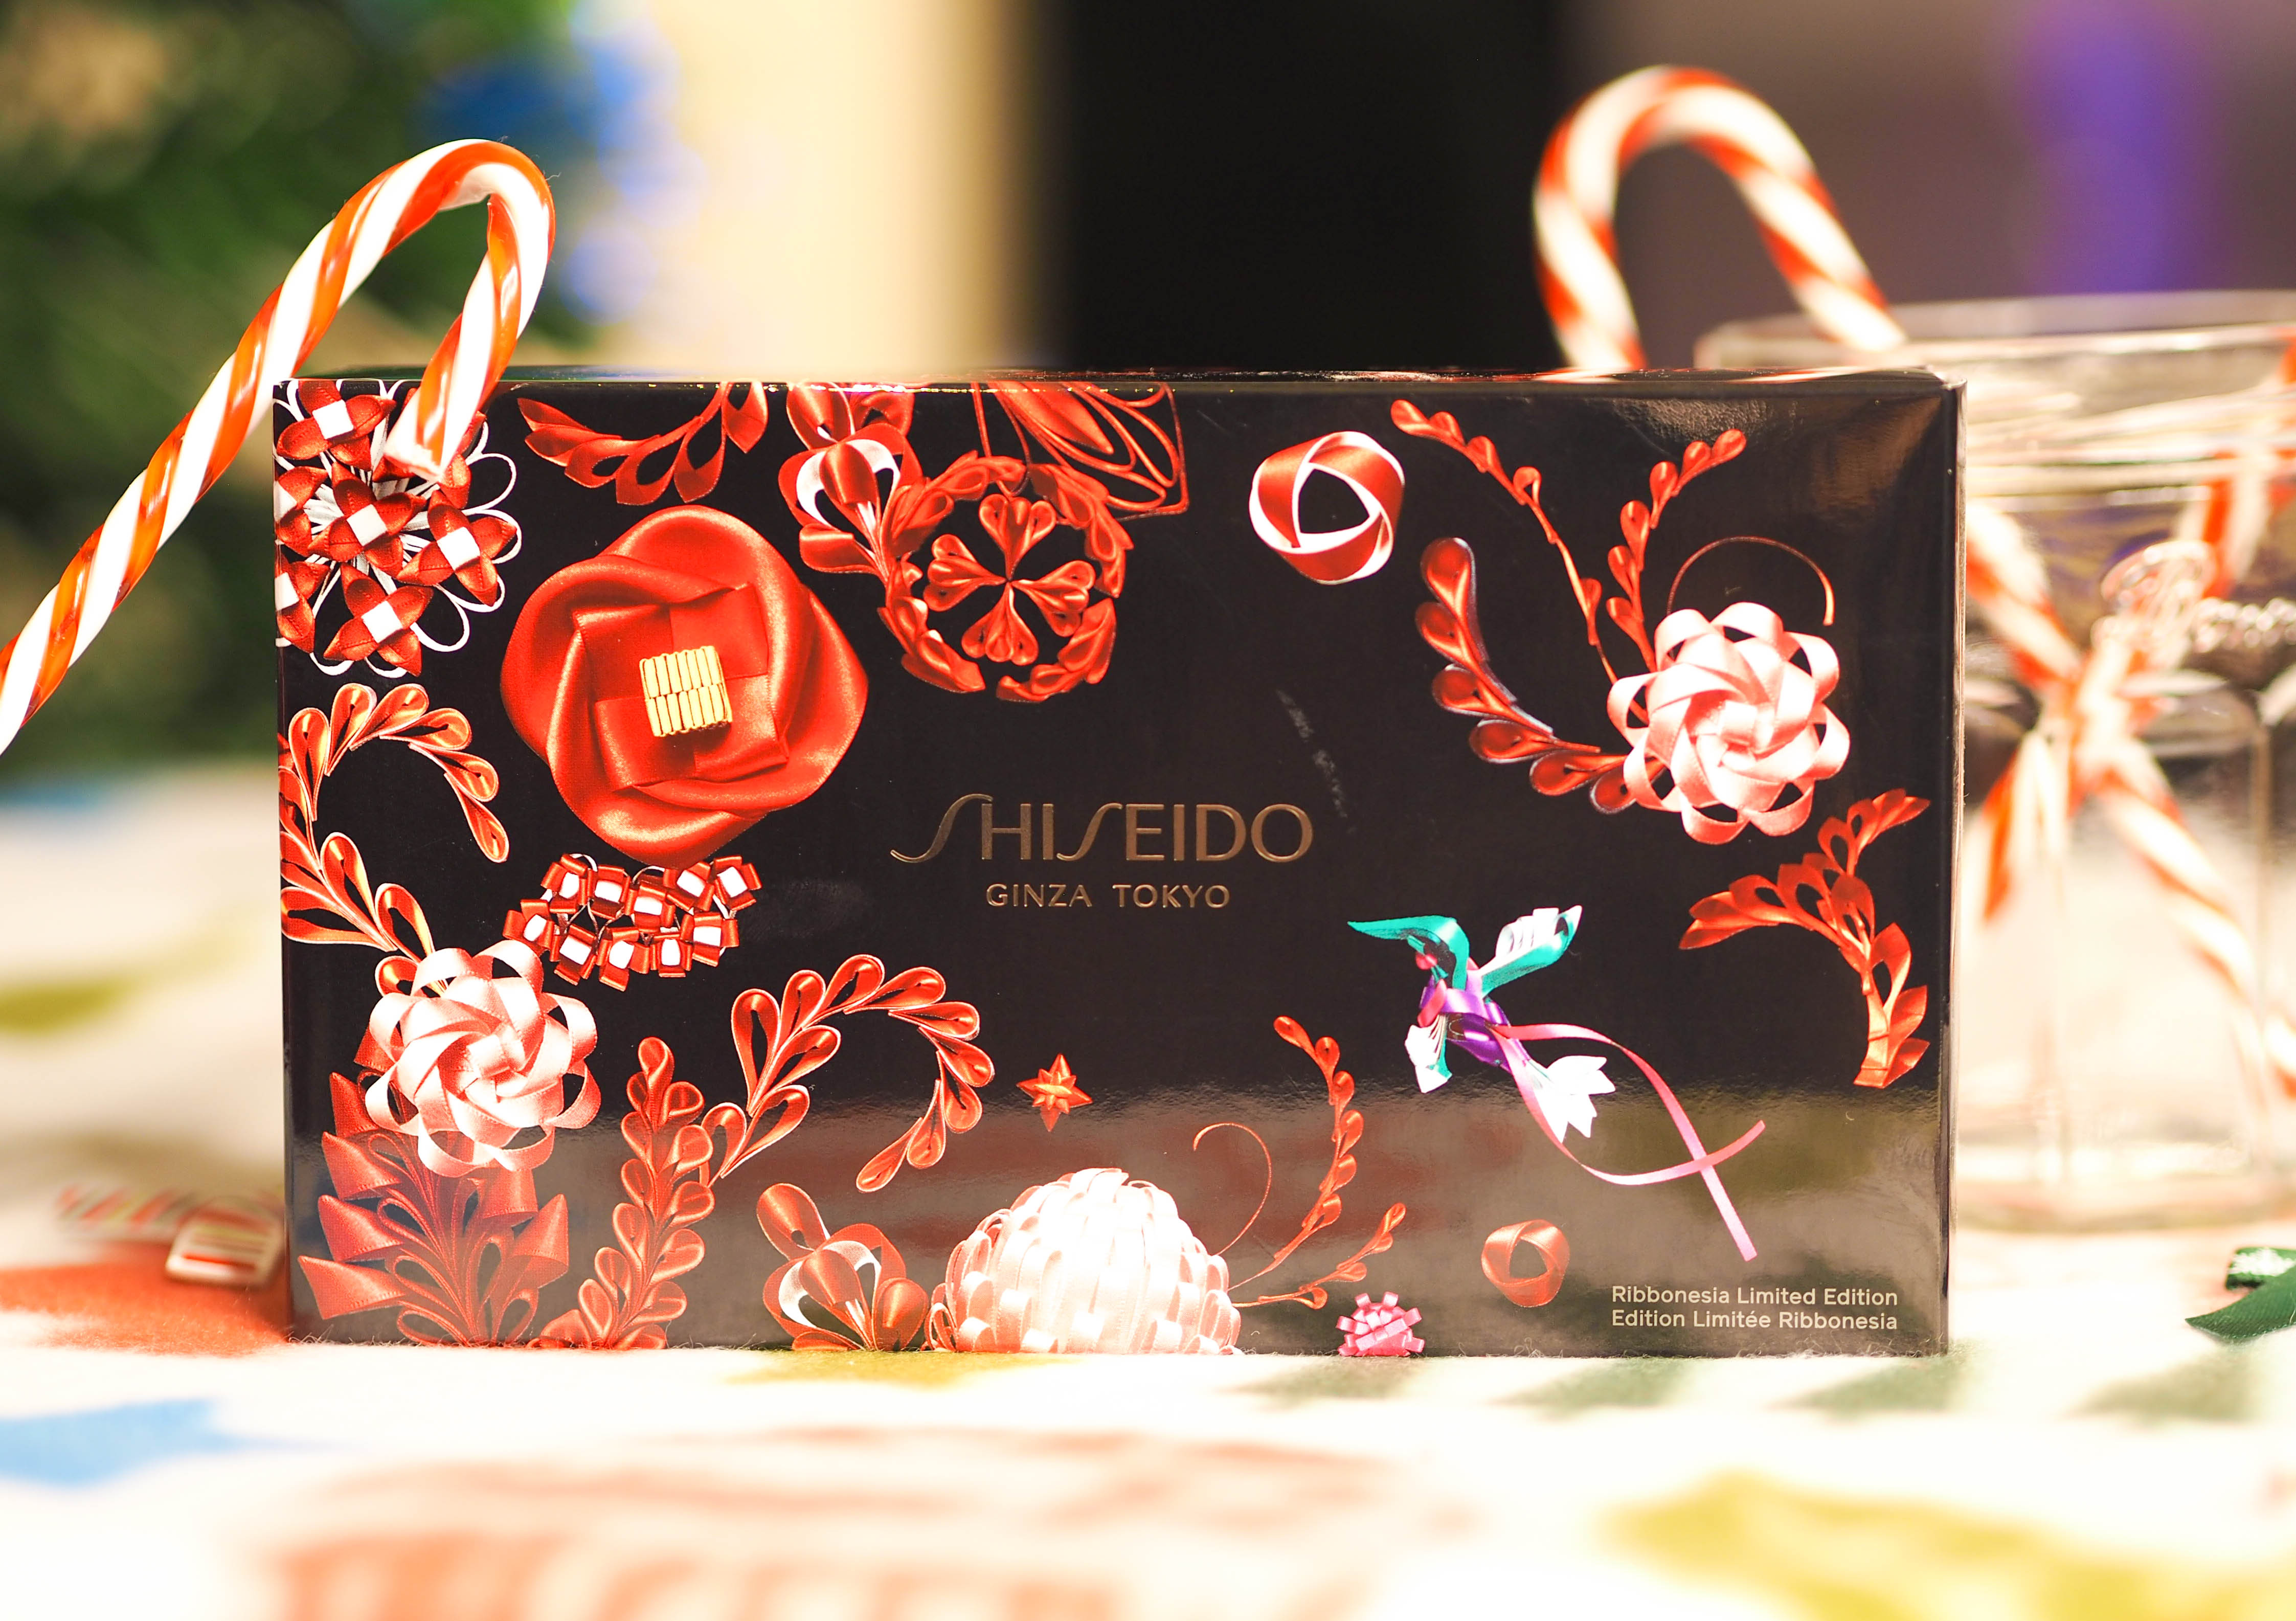 Shiseido Mini ModernMatte Powder Lipstick Gift Set